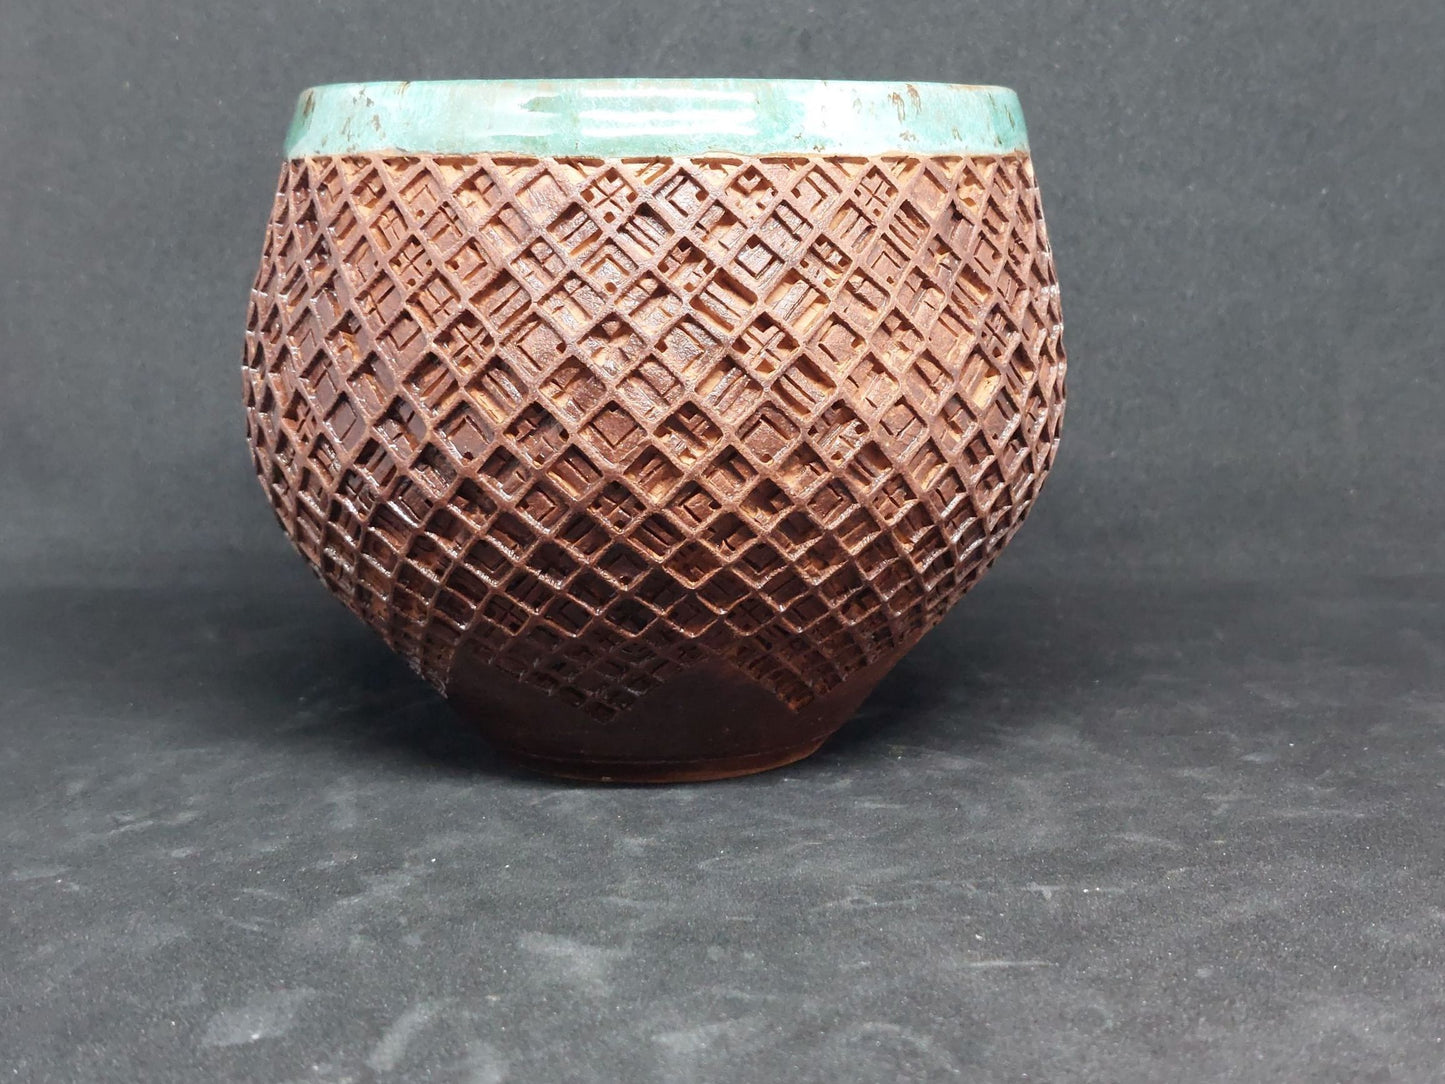 Green bowl on red clay - tartan pattern